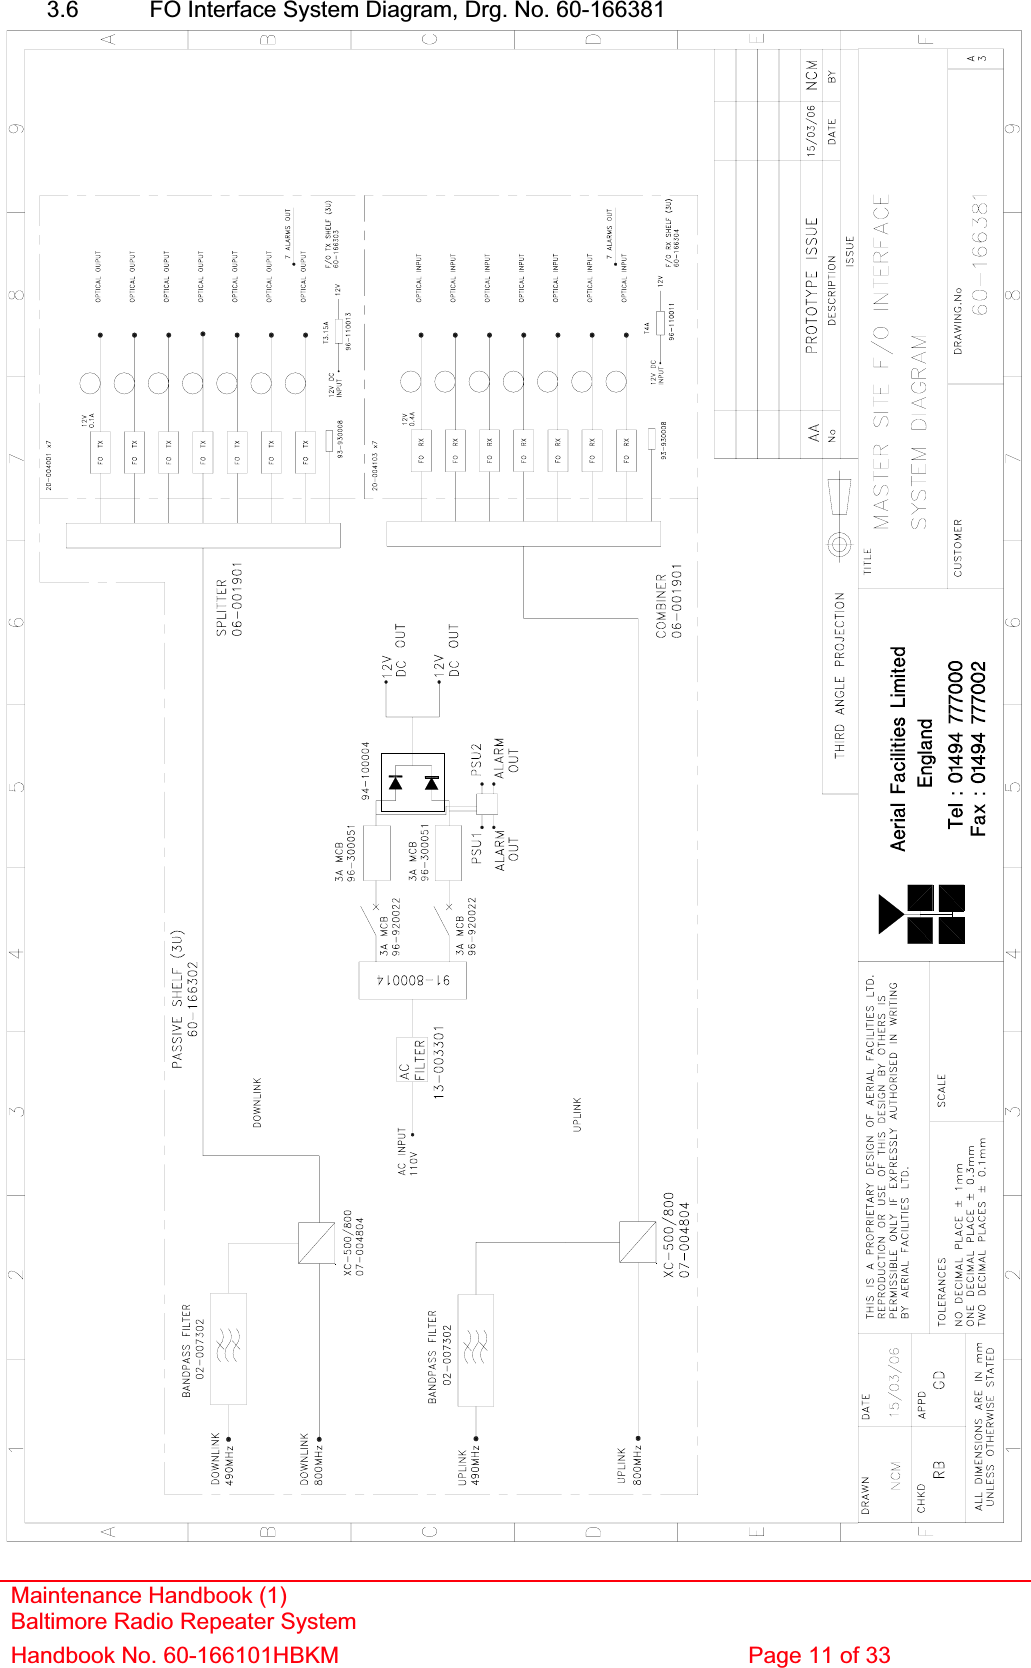 3.6  FO Interface System Diagram, Drg. No. 60-166381 Maintenance Handbook (1) Baltimore Radio Repeater System Handbook No. 60-166101HBKM  Page 11 of 33 